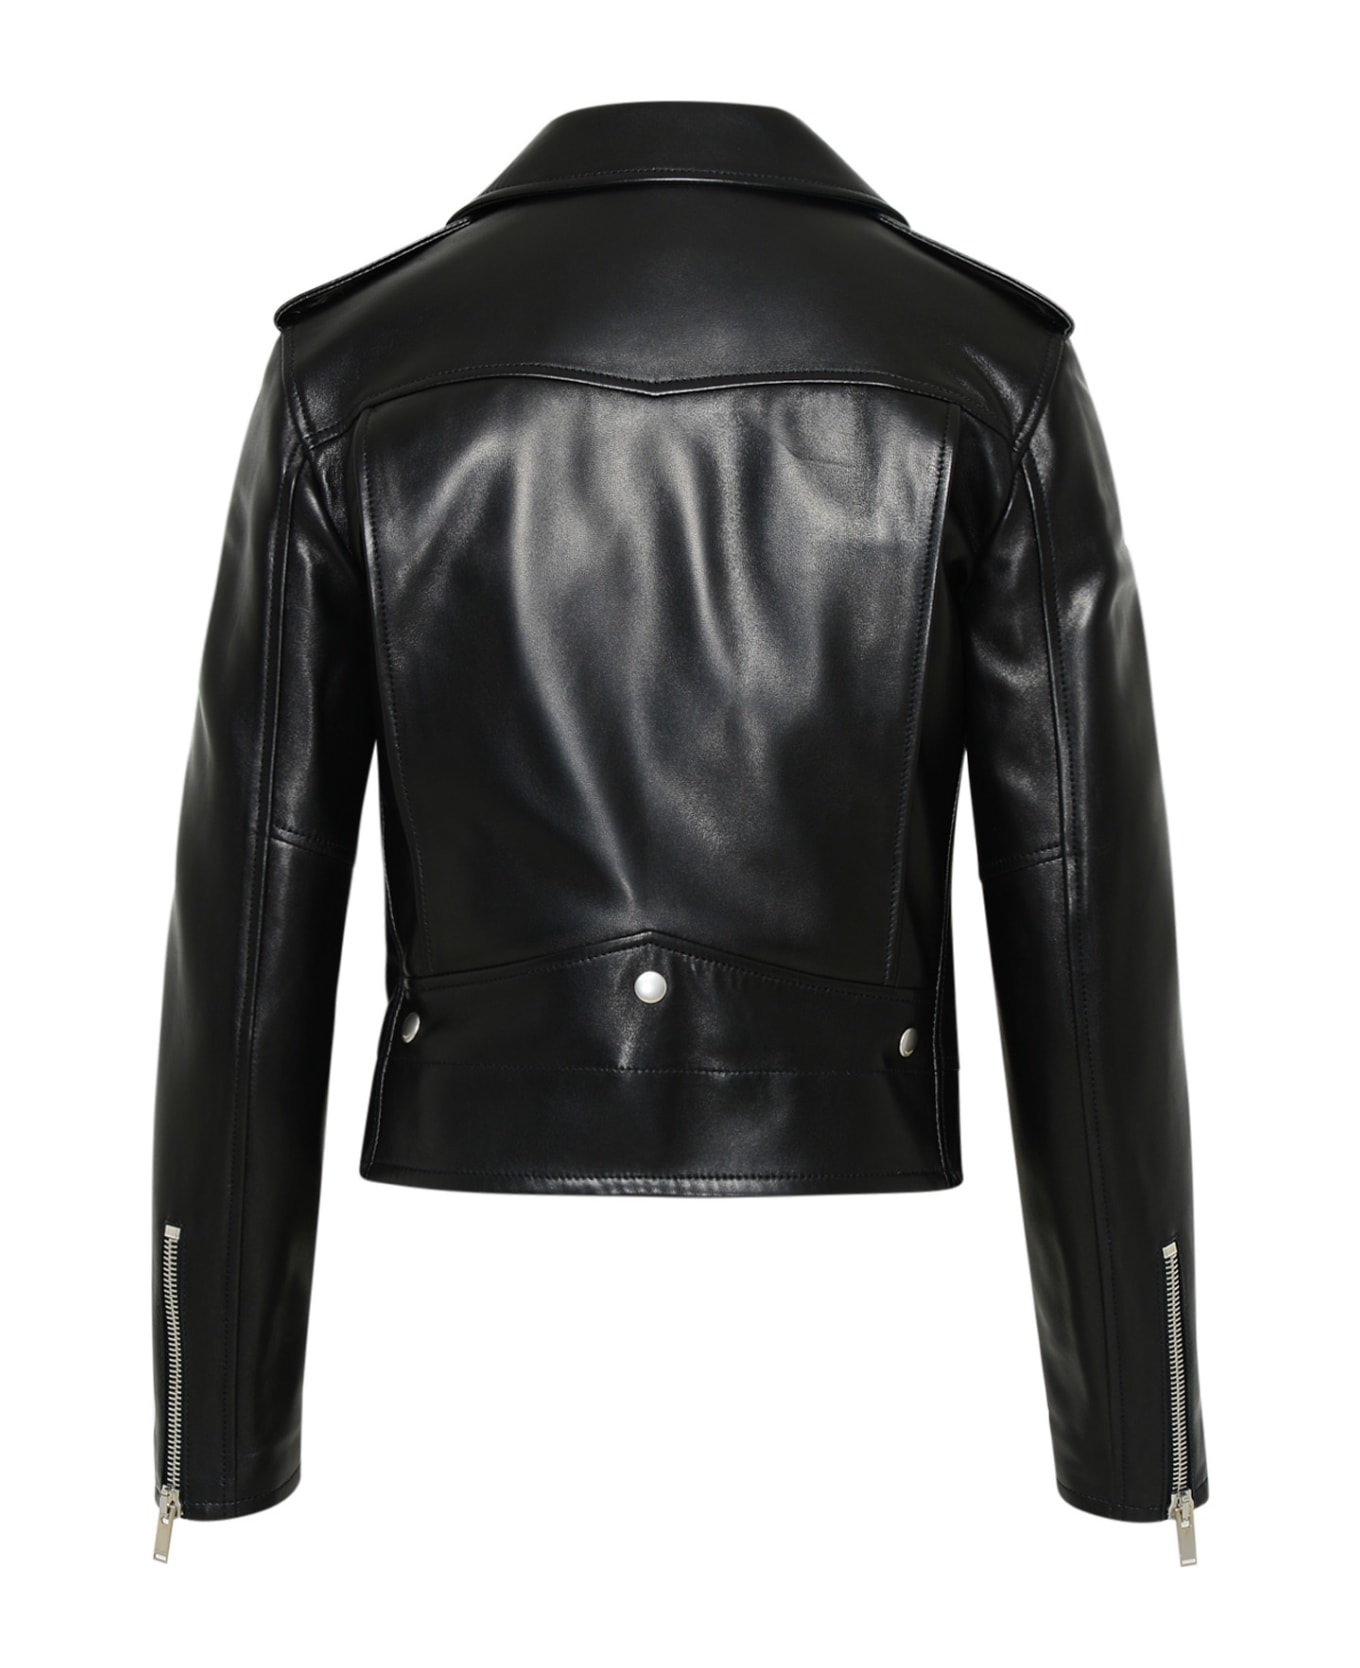 Saint Laurent Black Leather Motorcycle Biker Jacket - Black